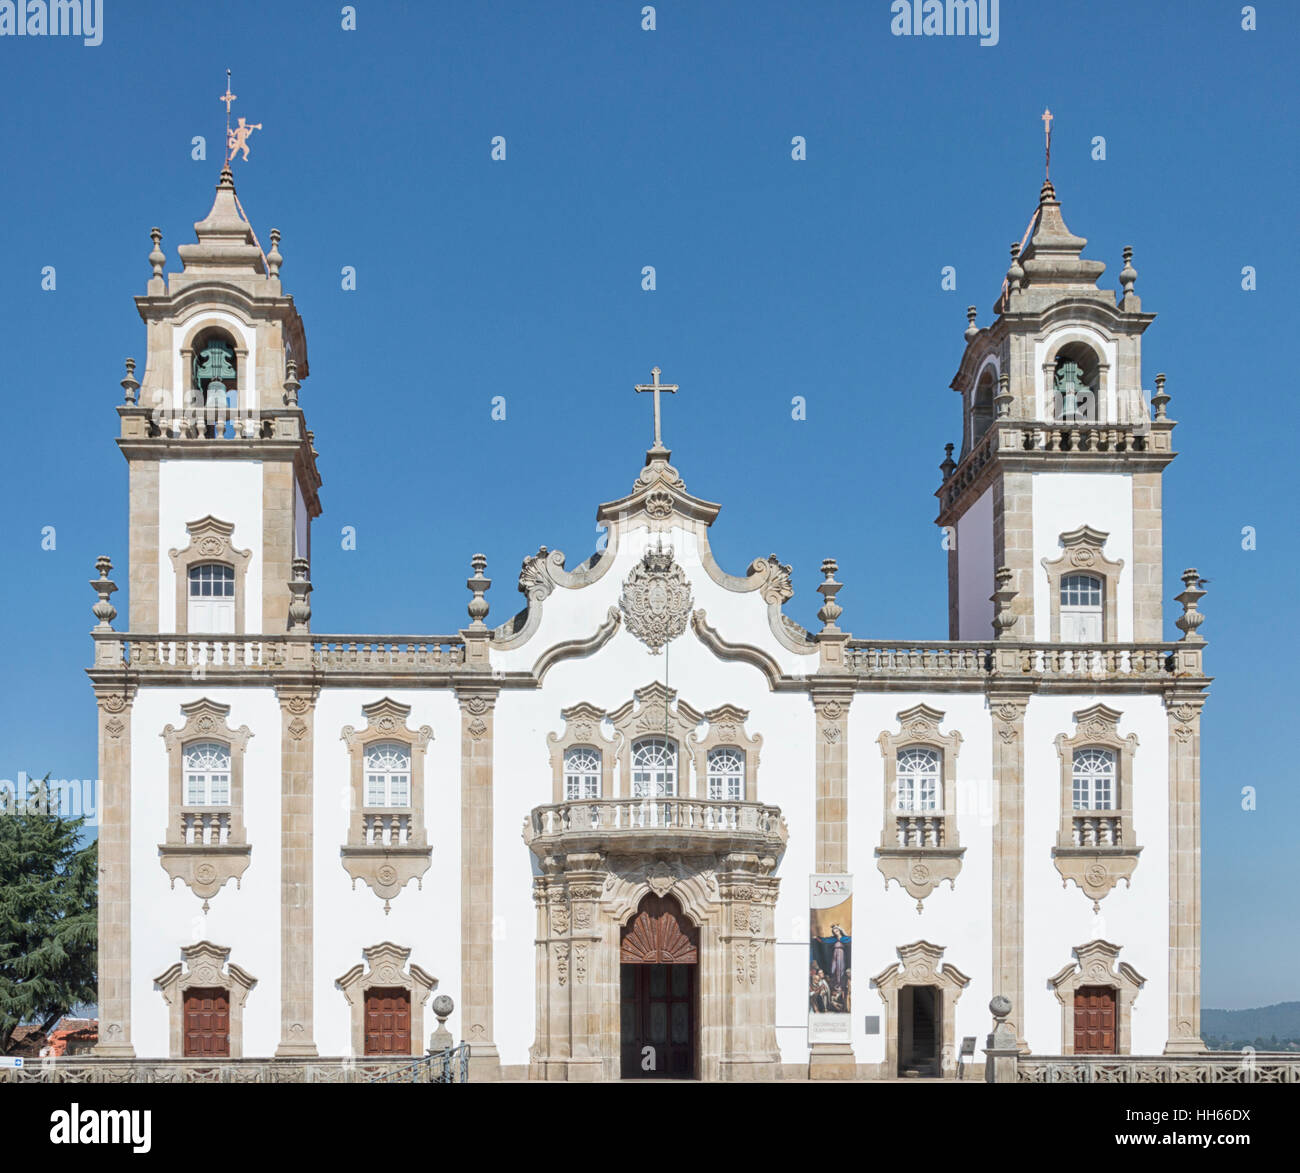 Viseu, Beira, Portugal: July 20, 2016: Misericordia Church main entrance. July 20, 2016 in Viseu, Portugal. Stock Photo